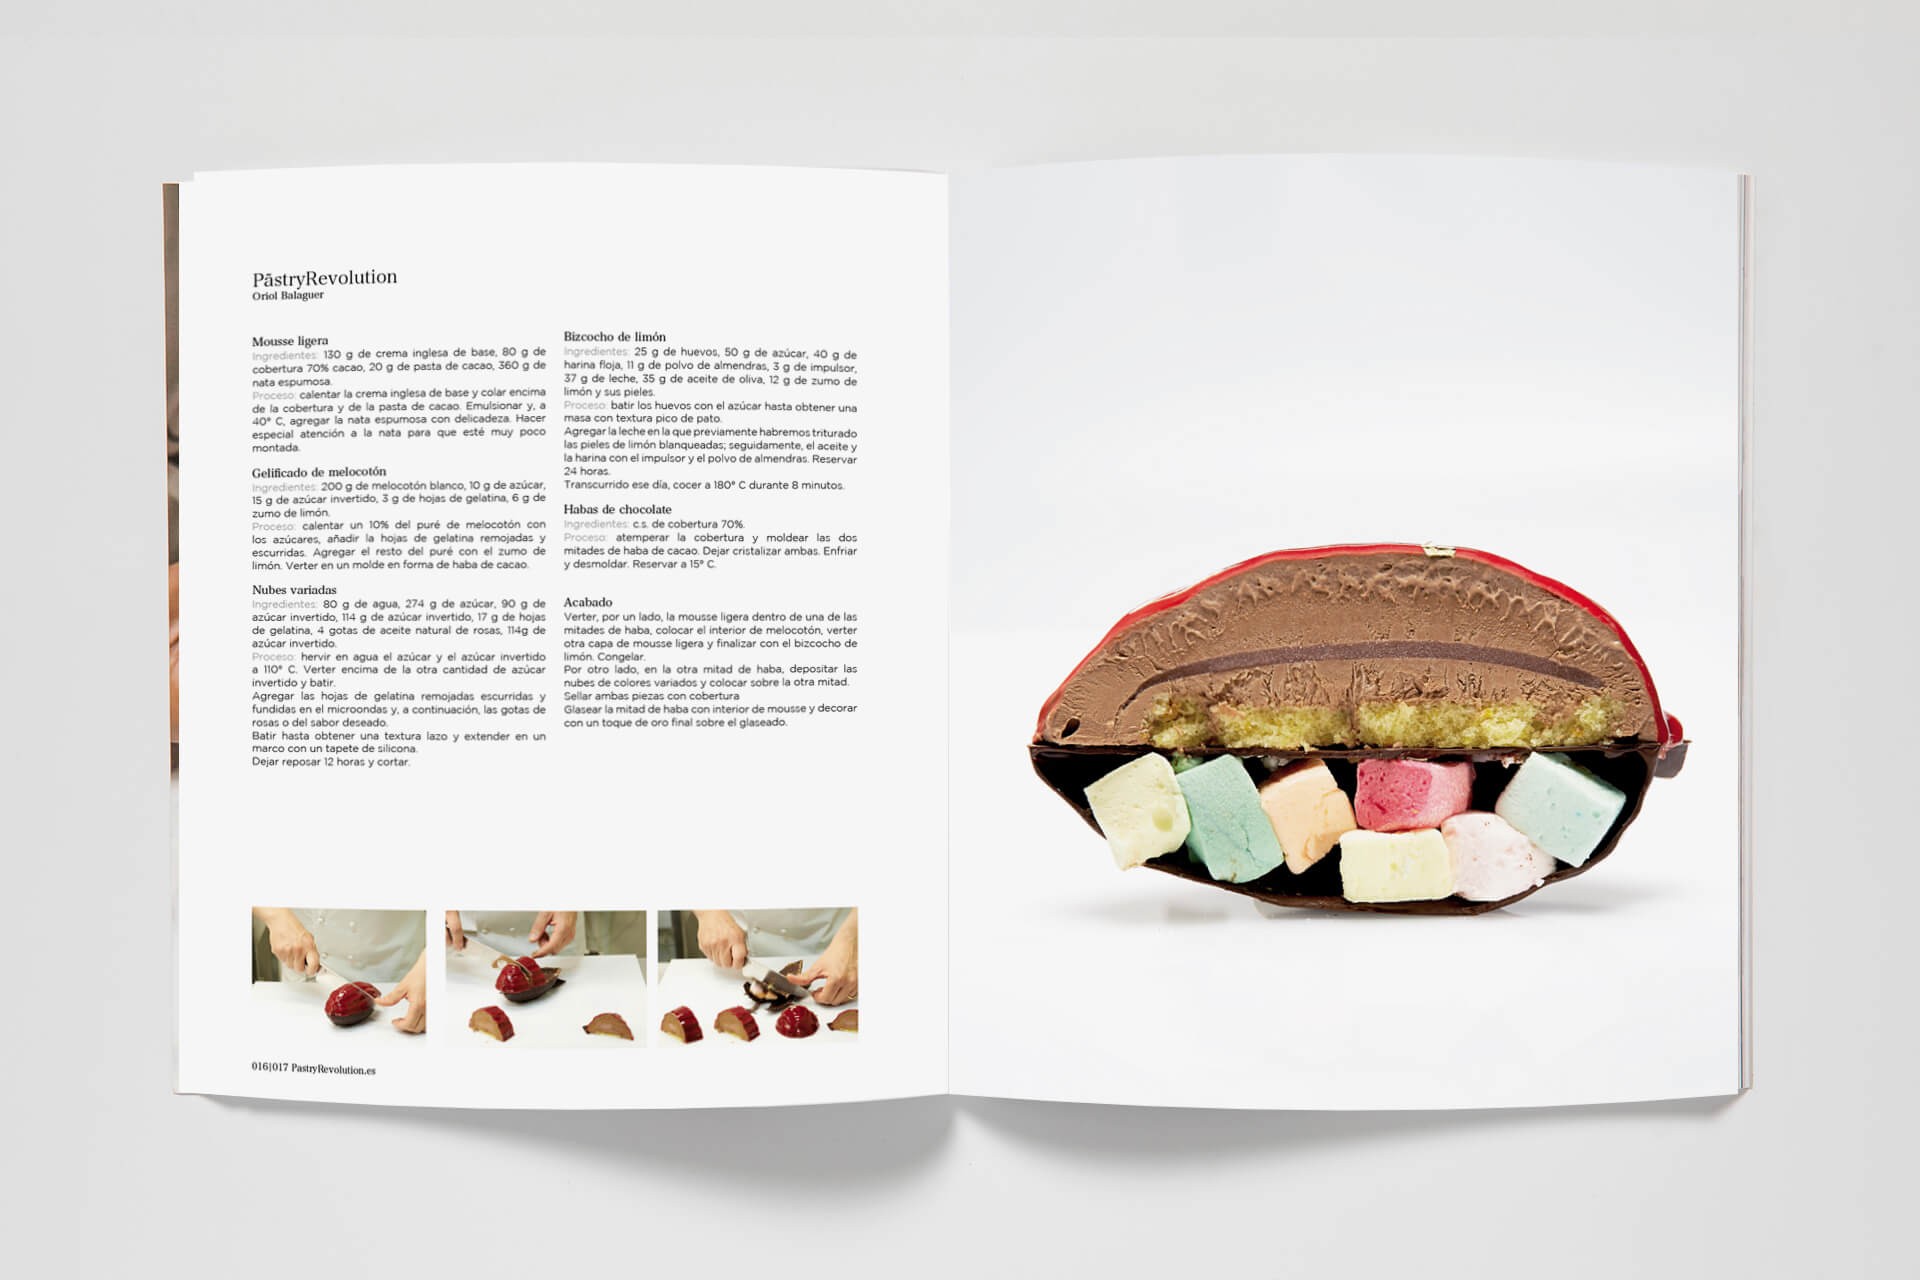 PastryRevolution #2 (eBook) 4